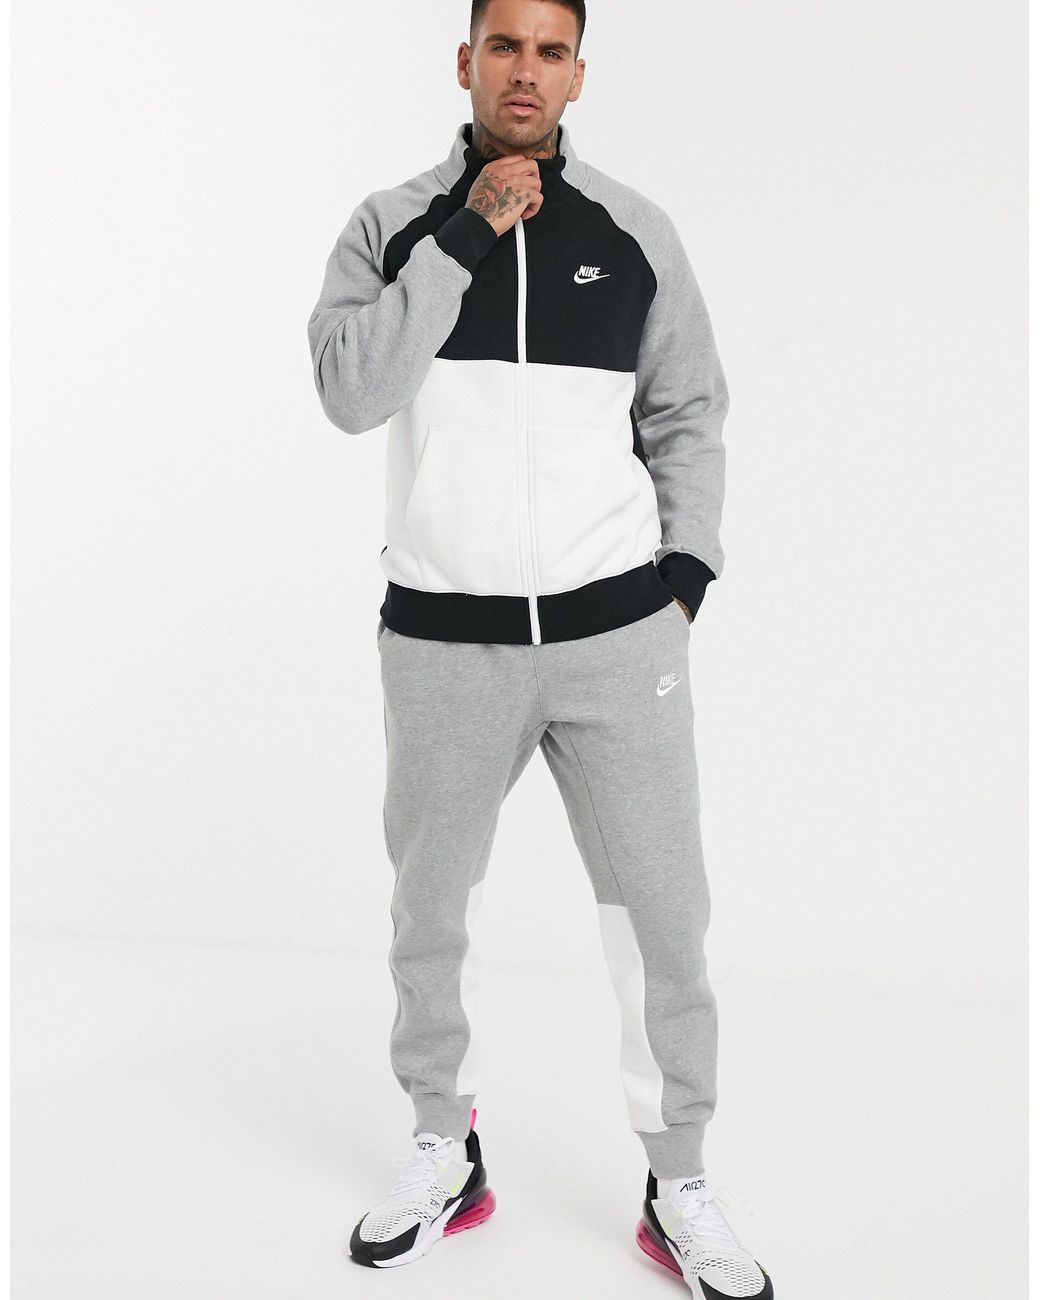 Nike fleece tracksuit in black and grey colourblock